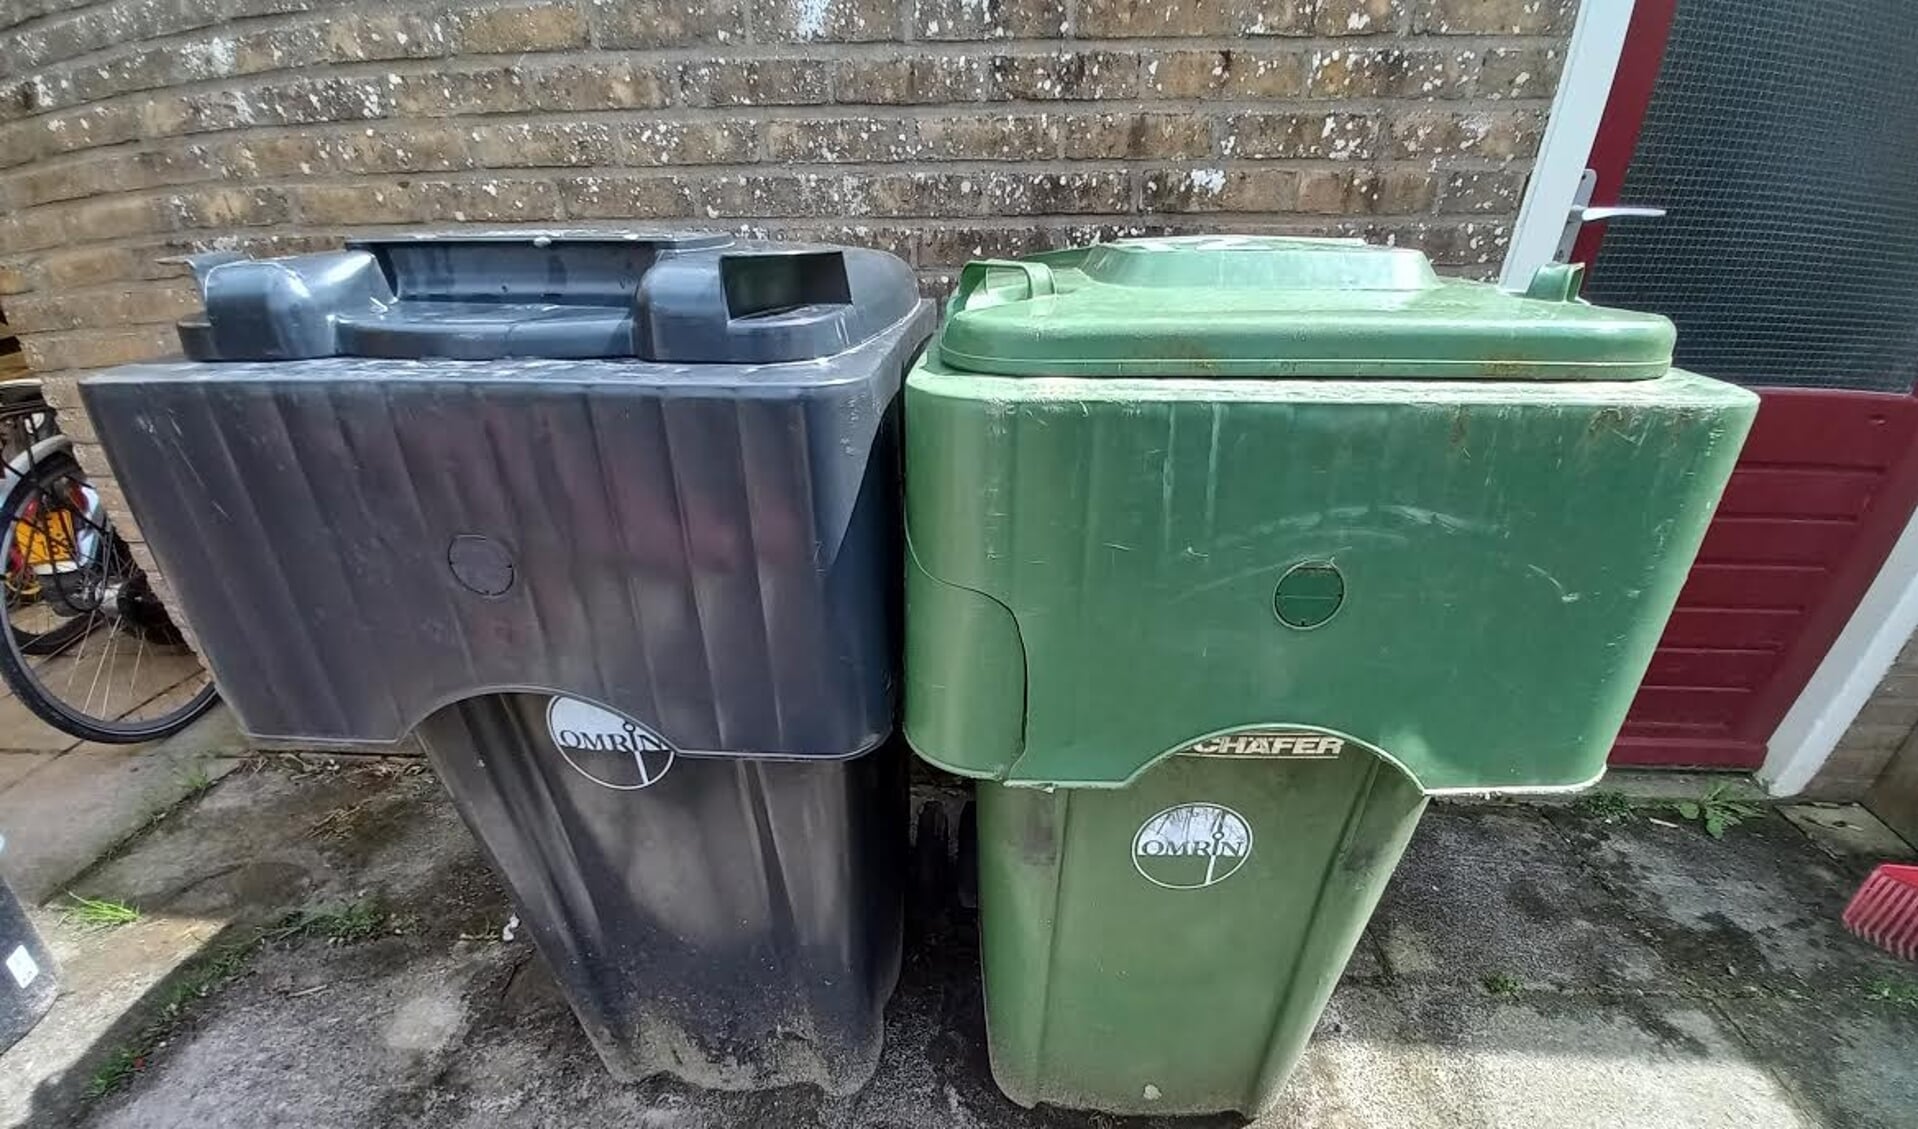 De groene en de grijze afvalcontainer.